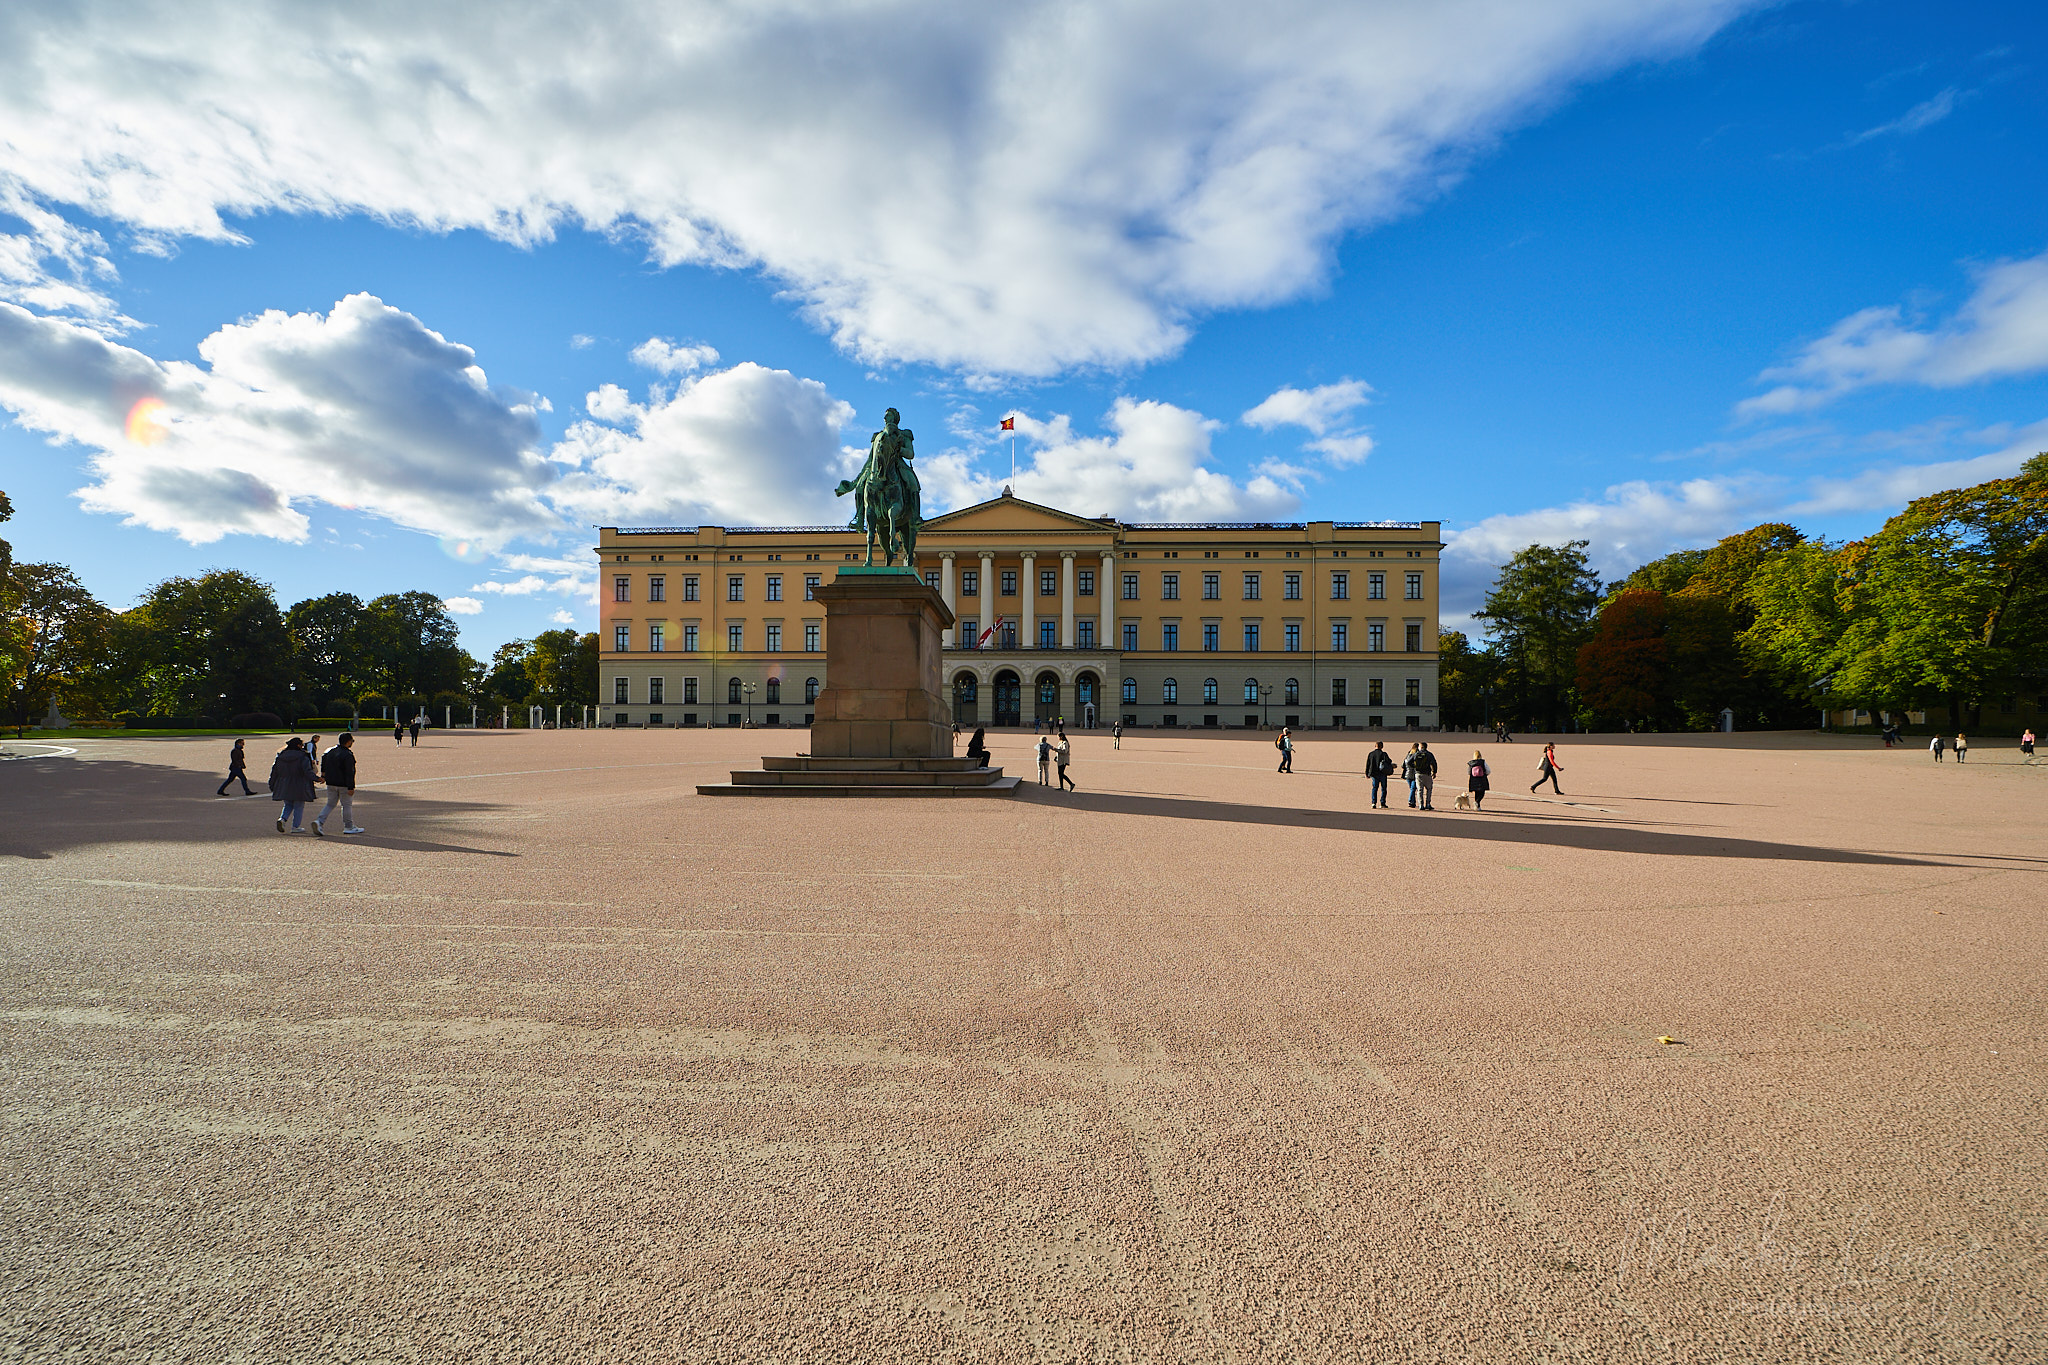 Königshaus in Oslo